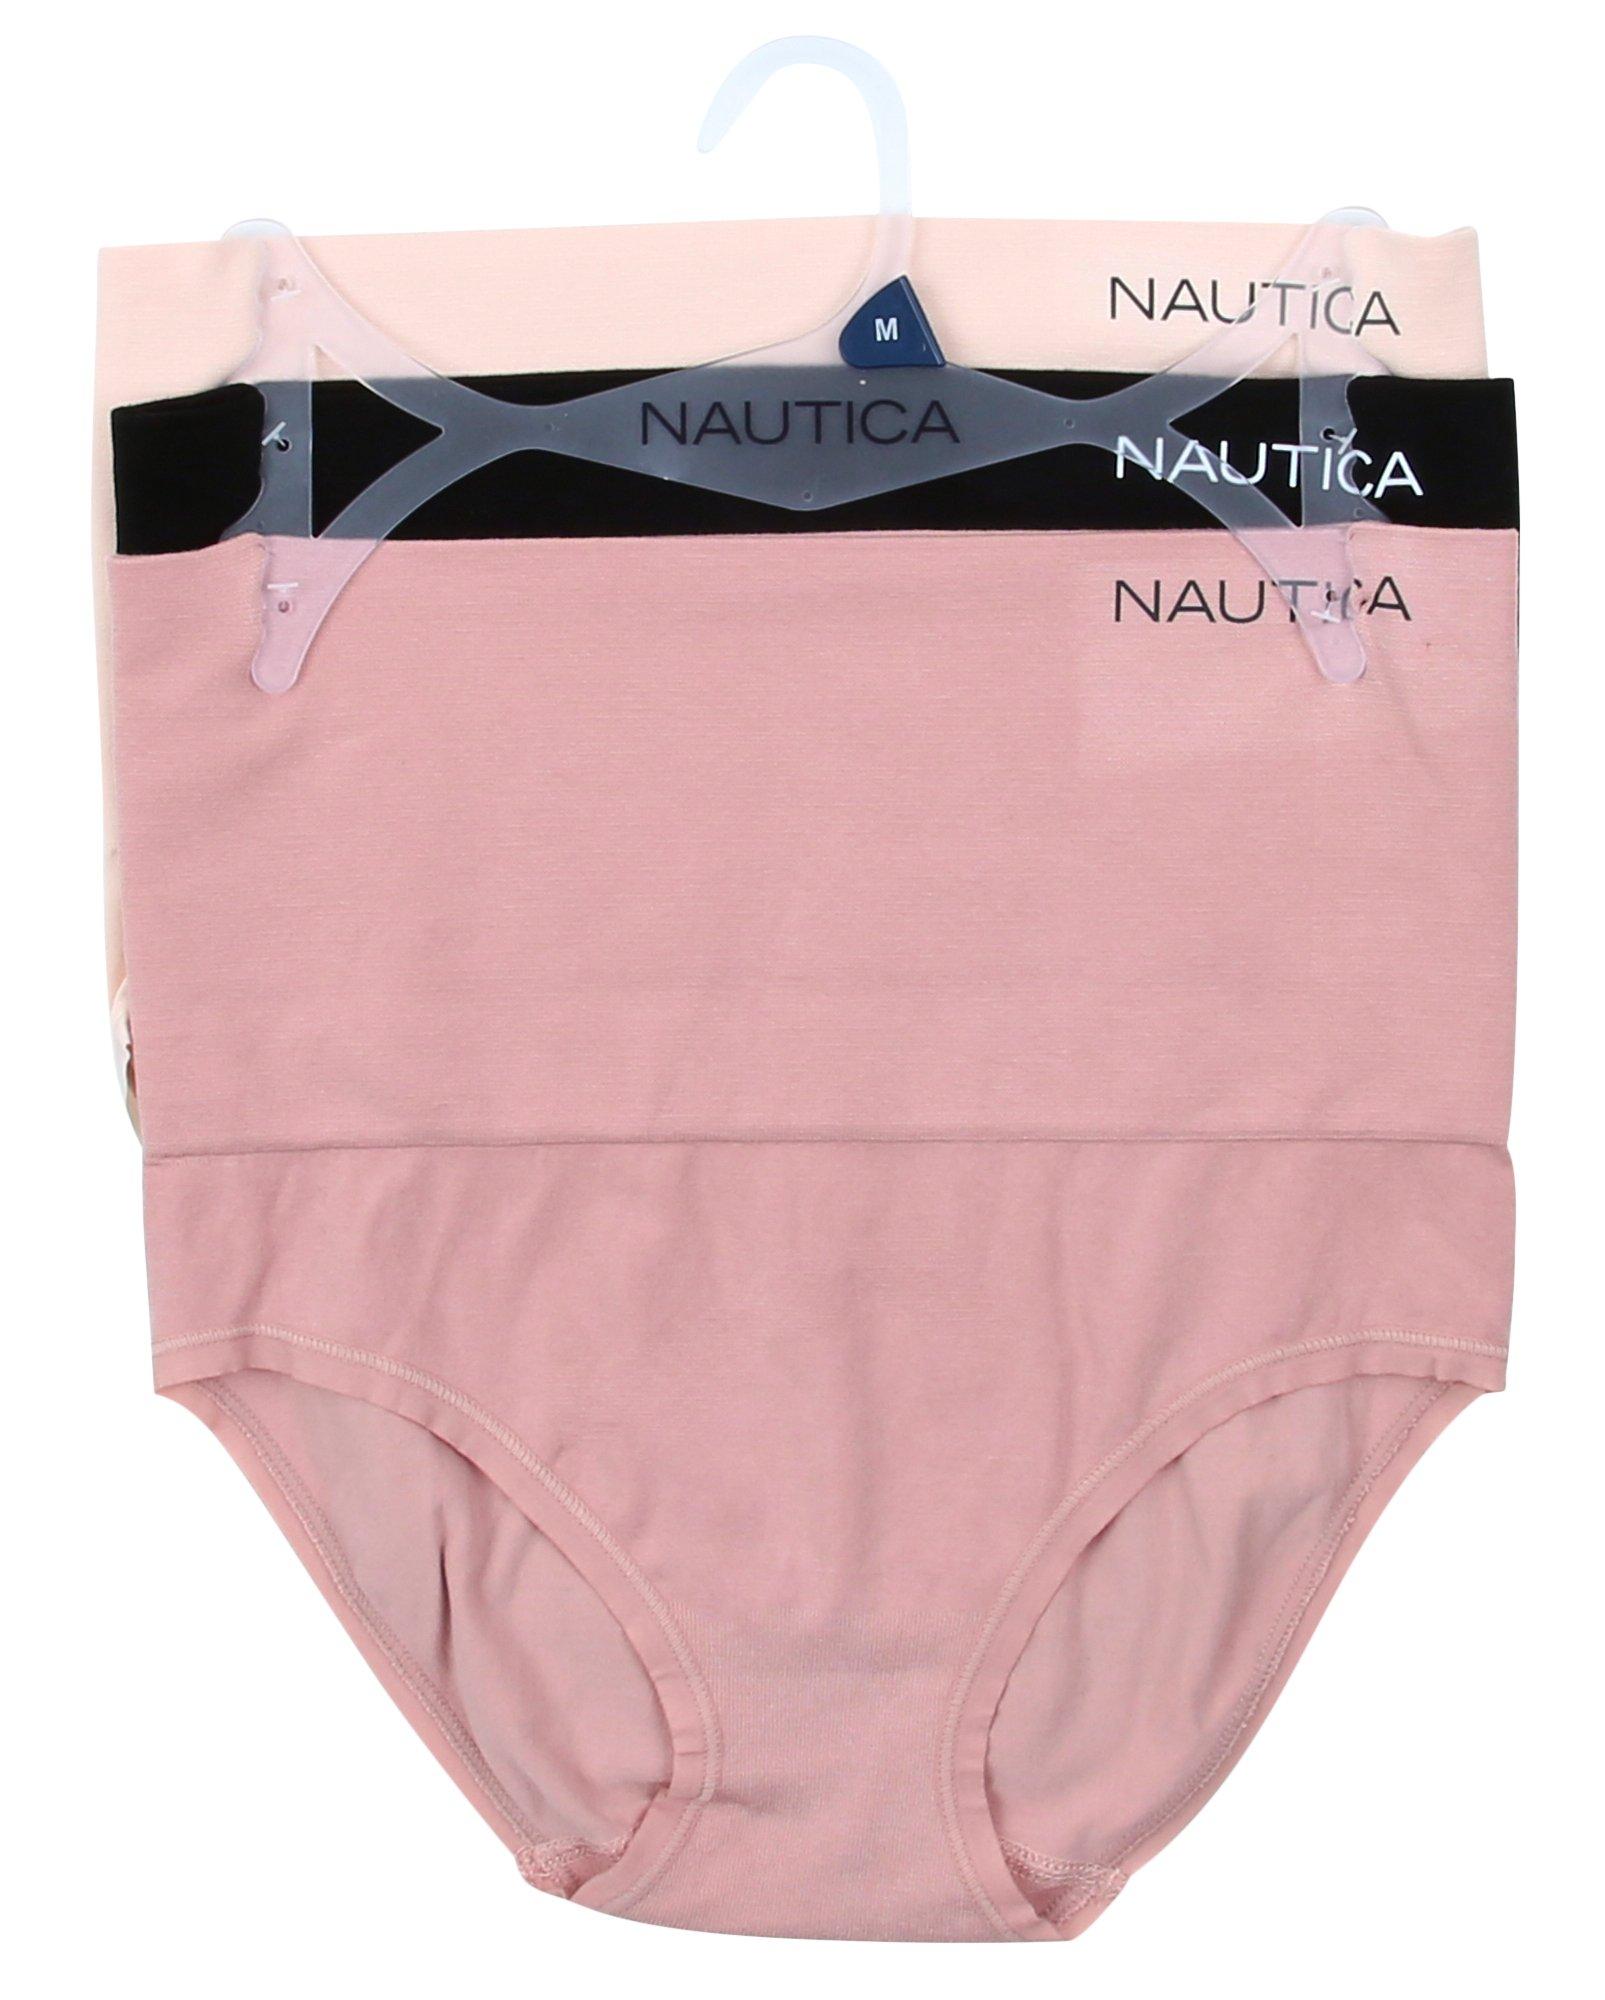 3 Nautica Panty No show thongs